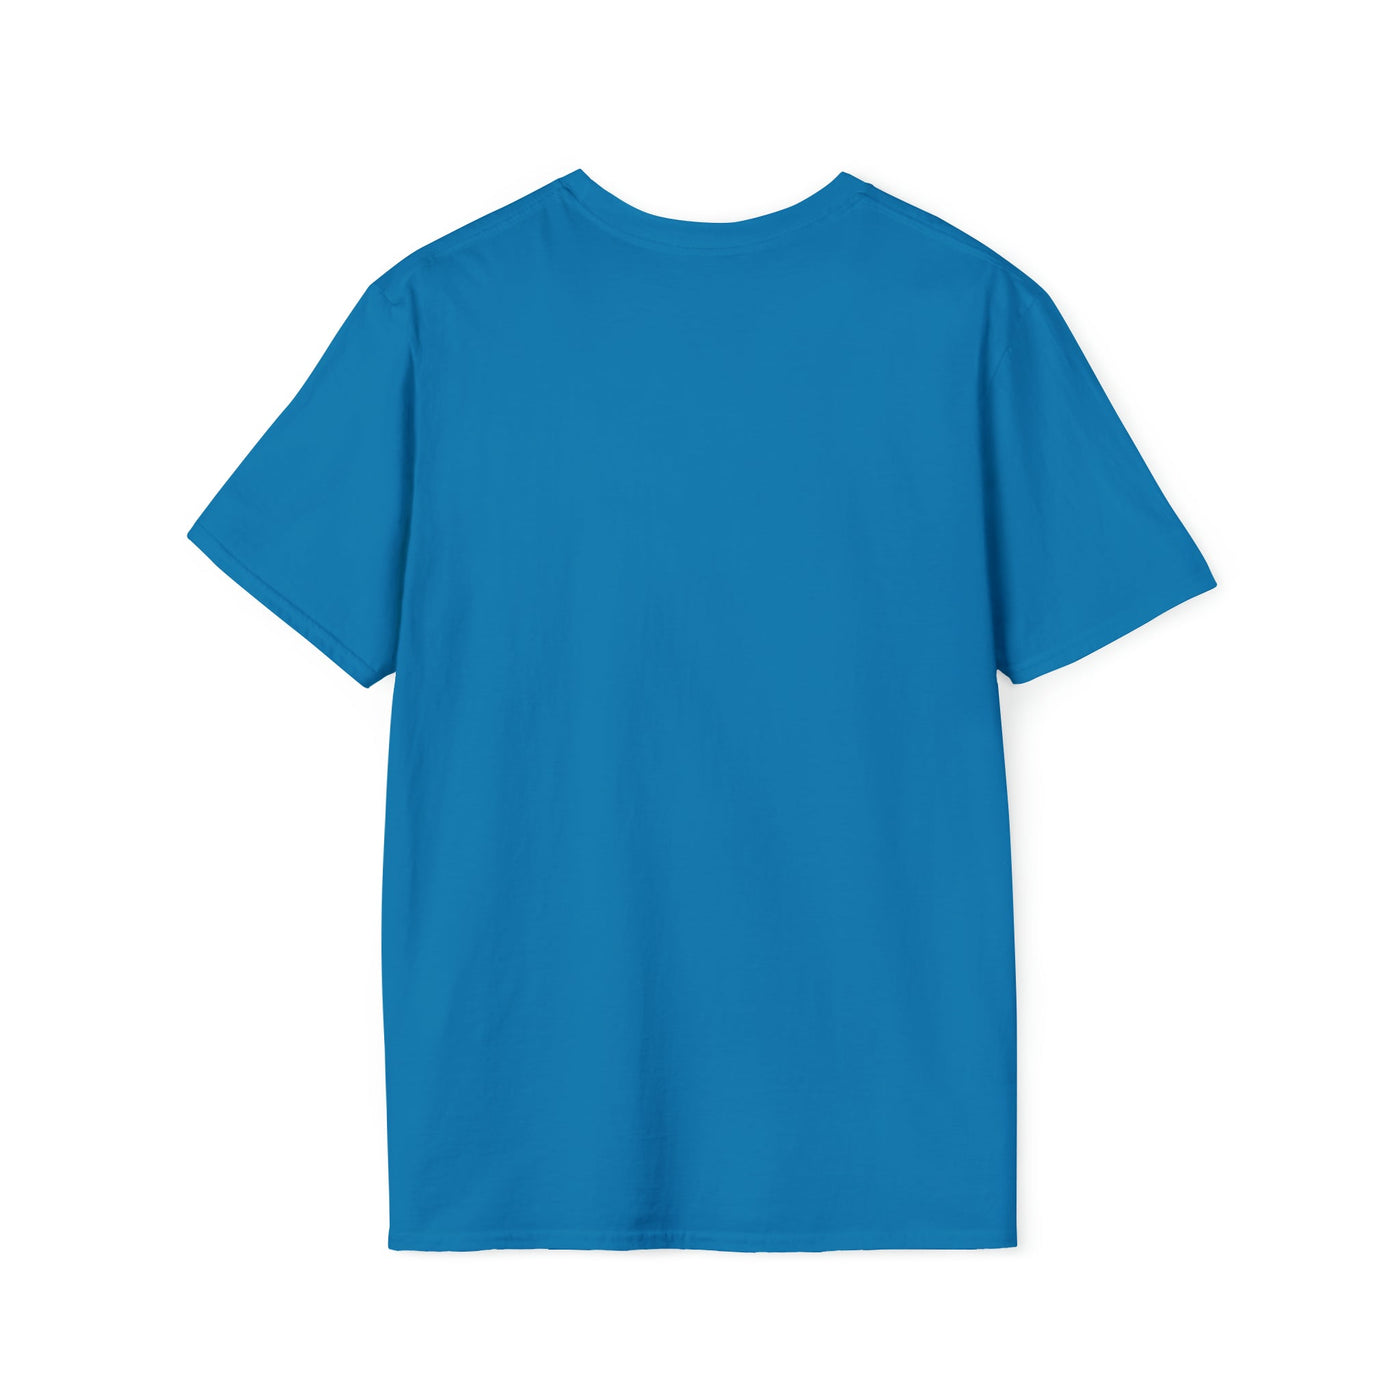 Belize Retro T-Shirt - Ezra's Clothing